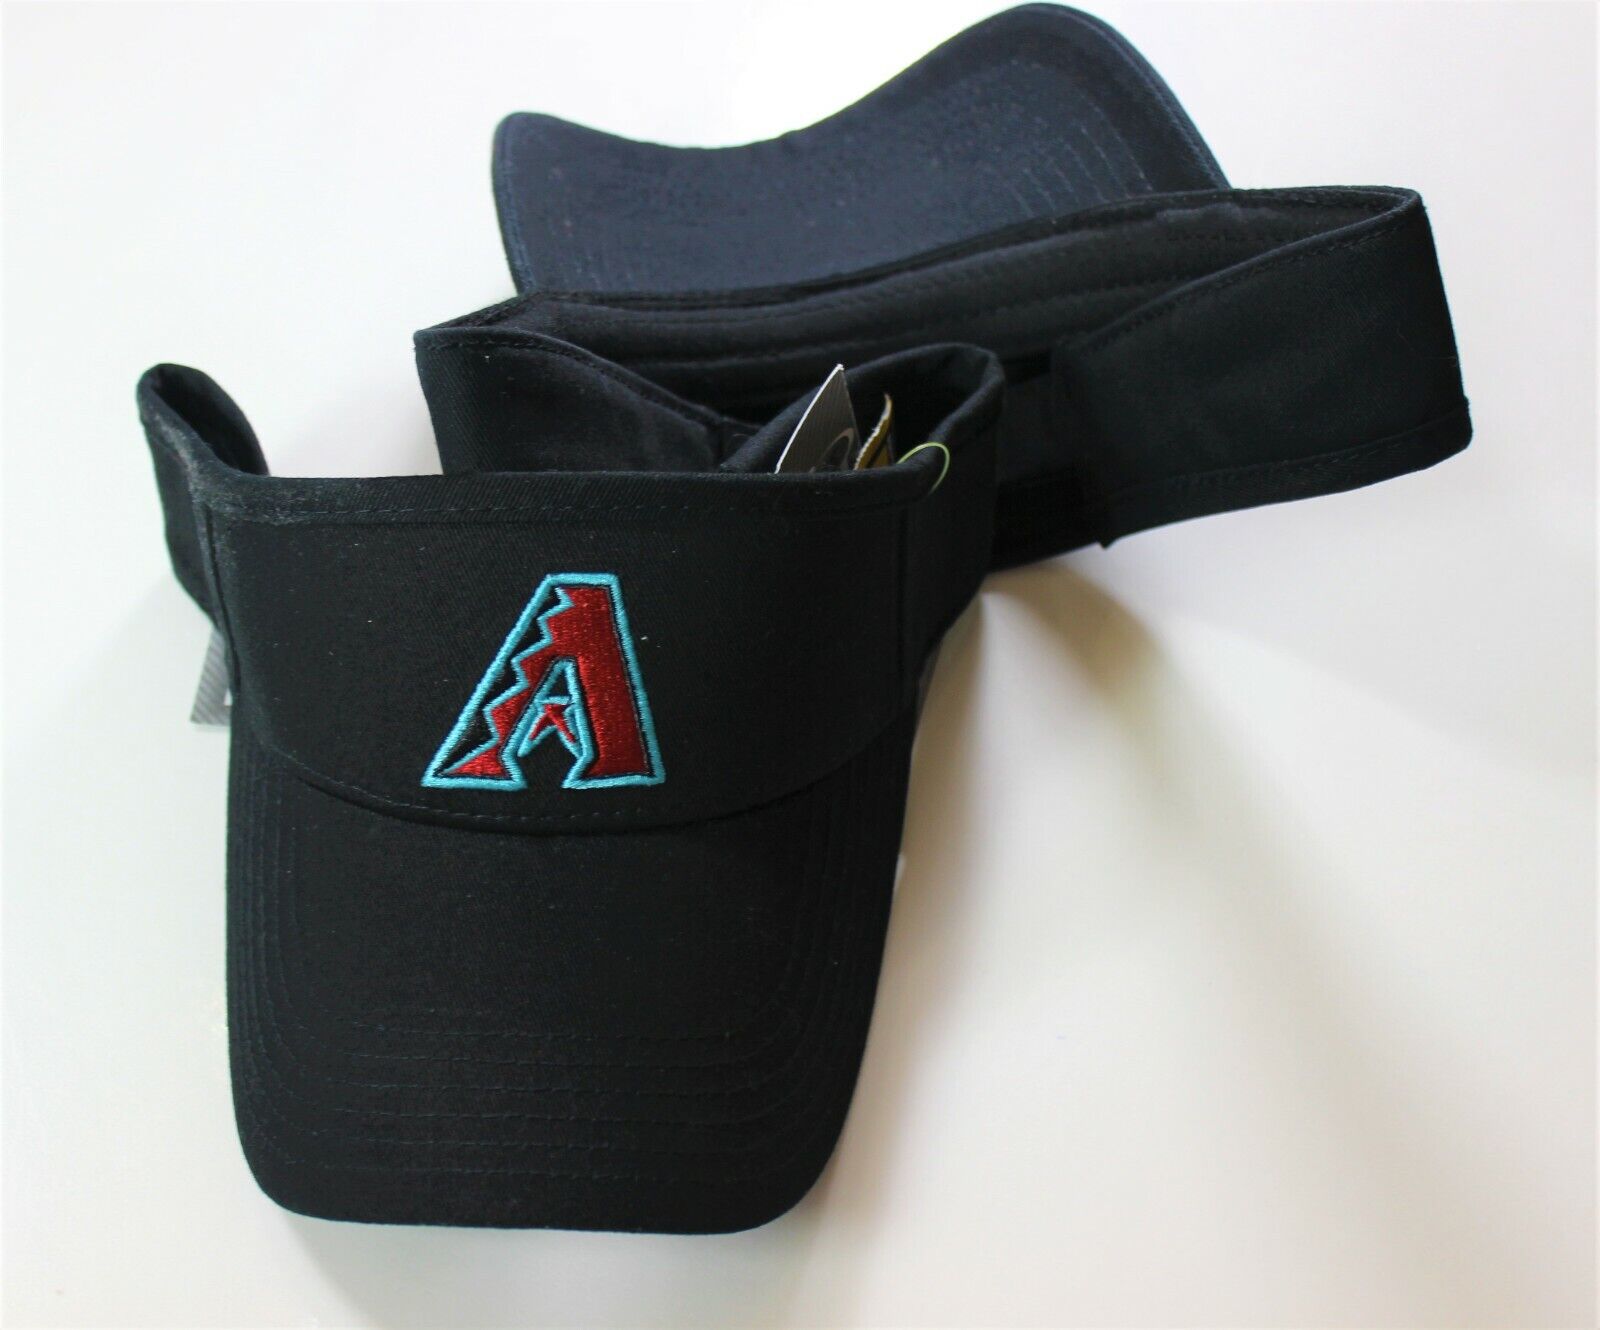 Arizona Diamond Backs Visor Hat Cap adjustable Black Trim and Brim